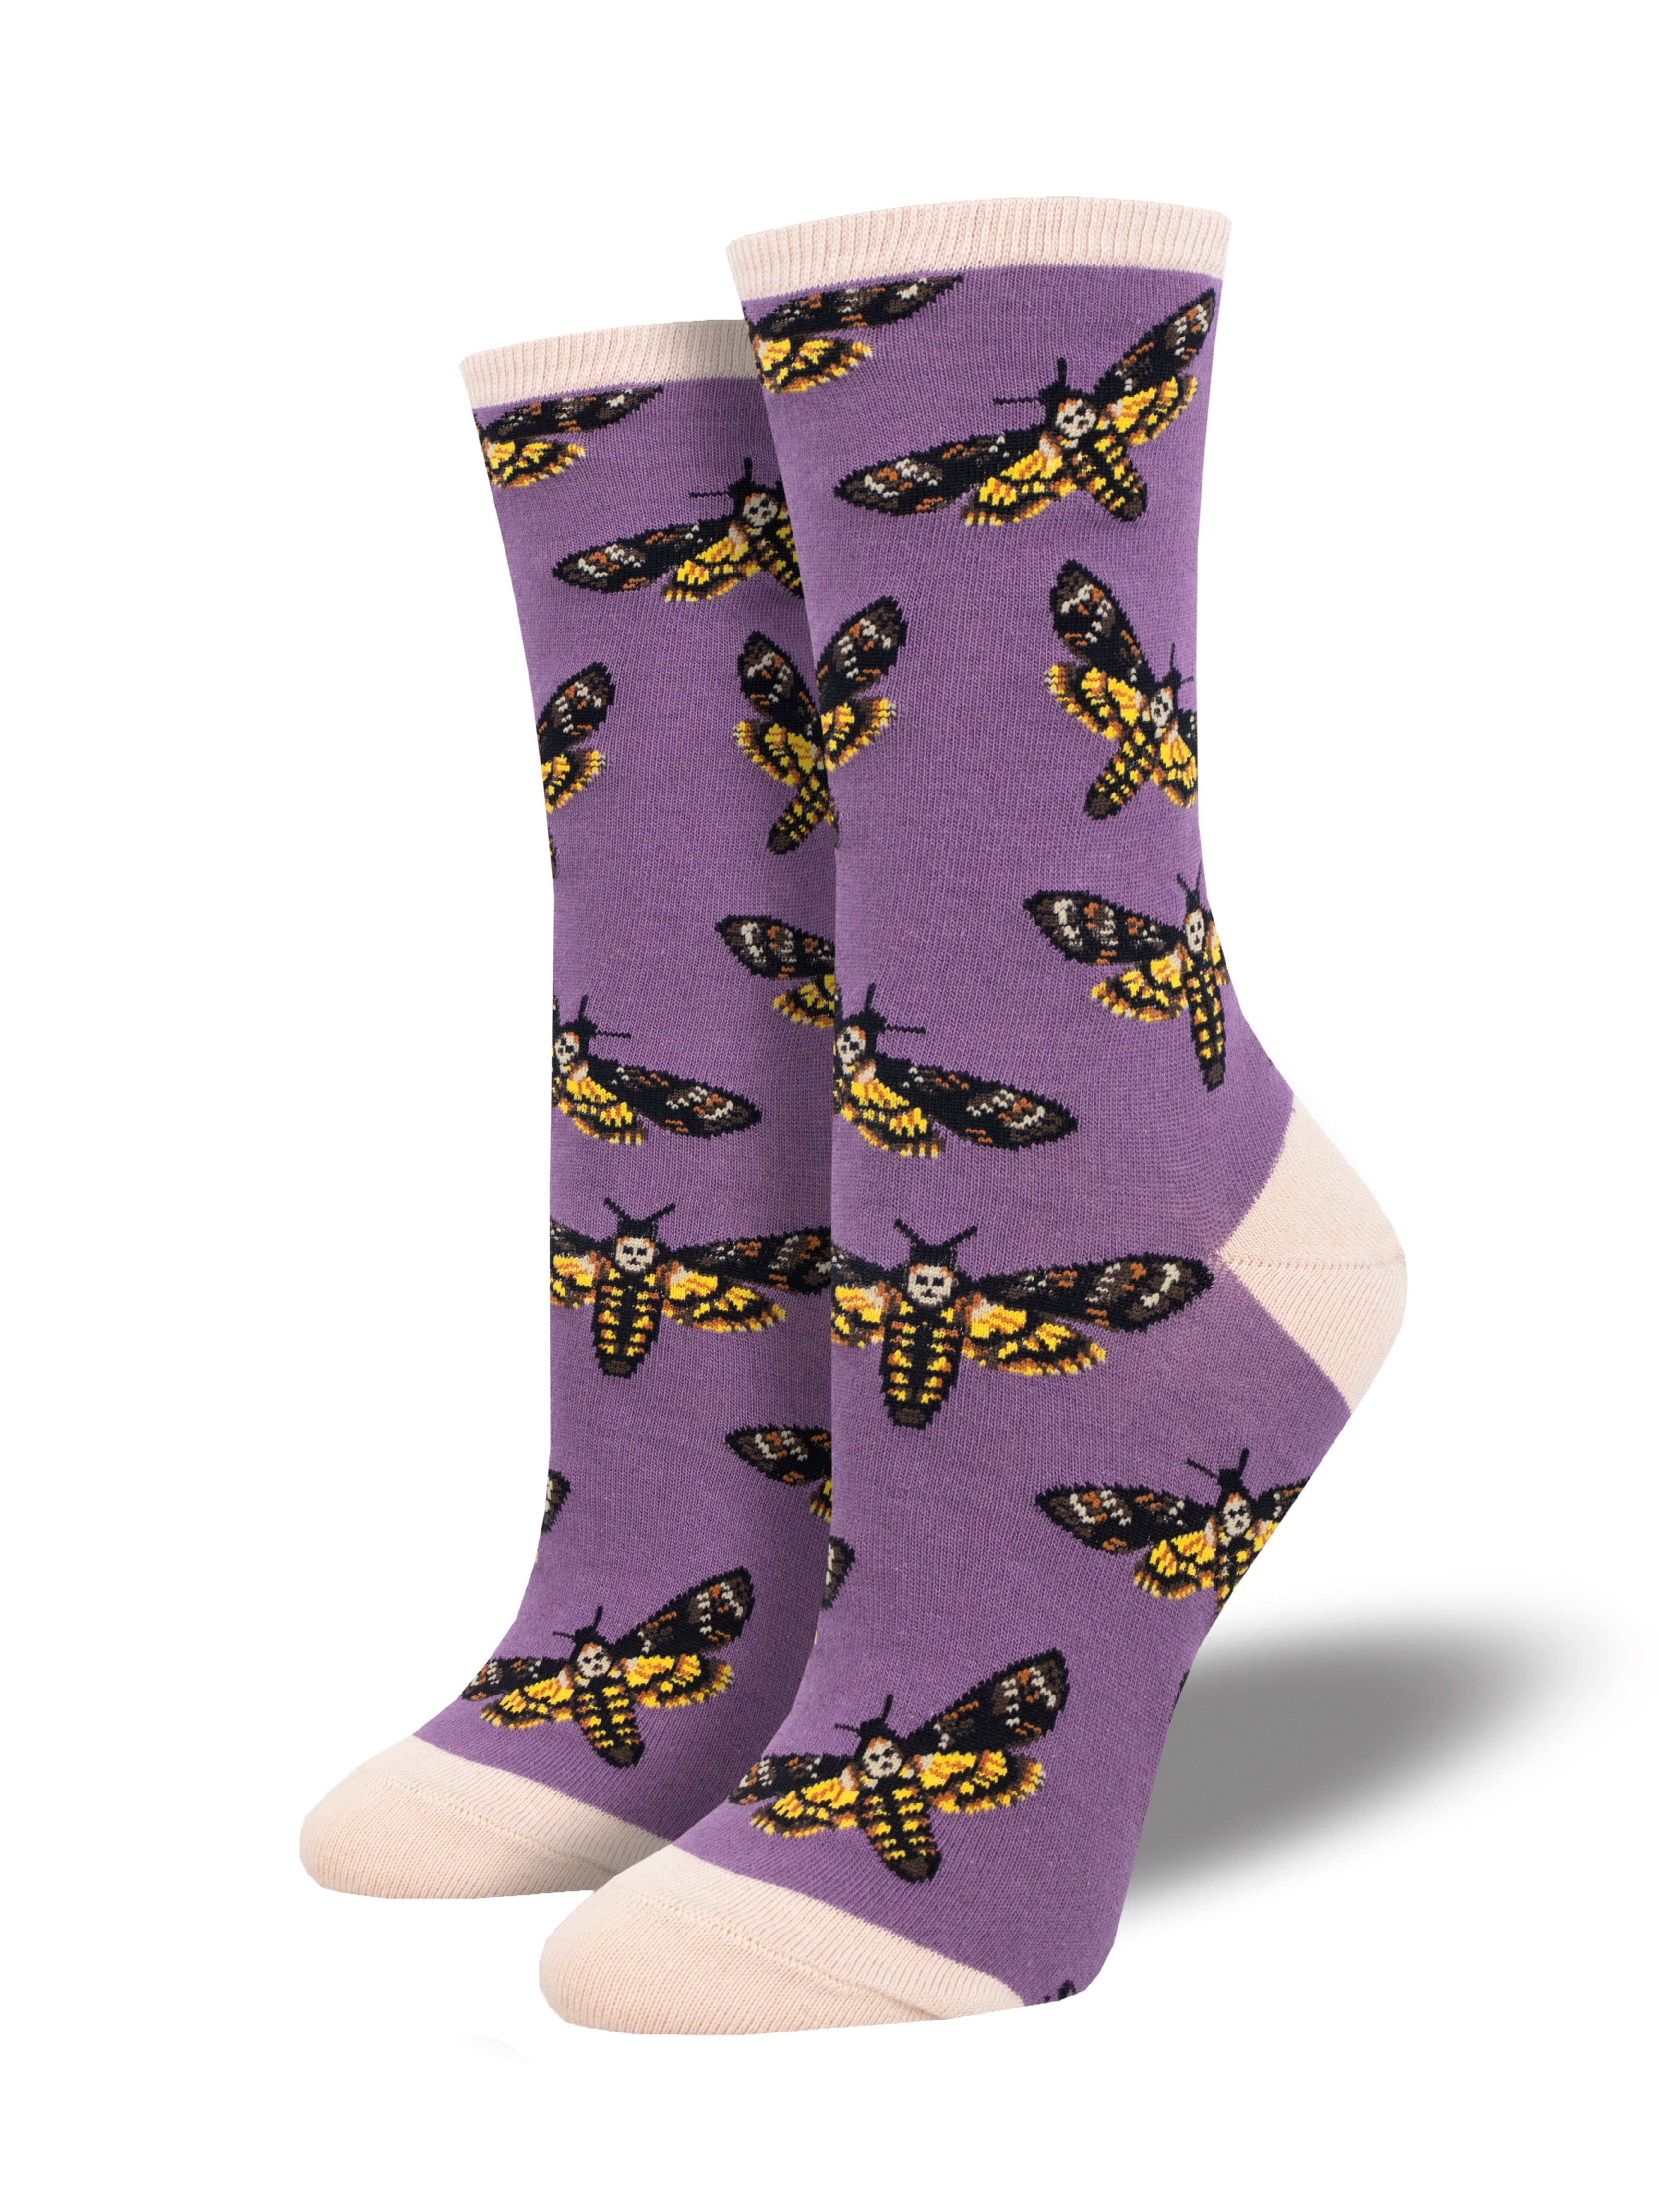 Women's "Moths To A Flame" Socks